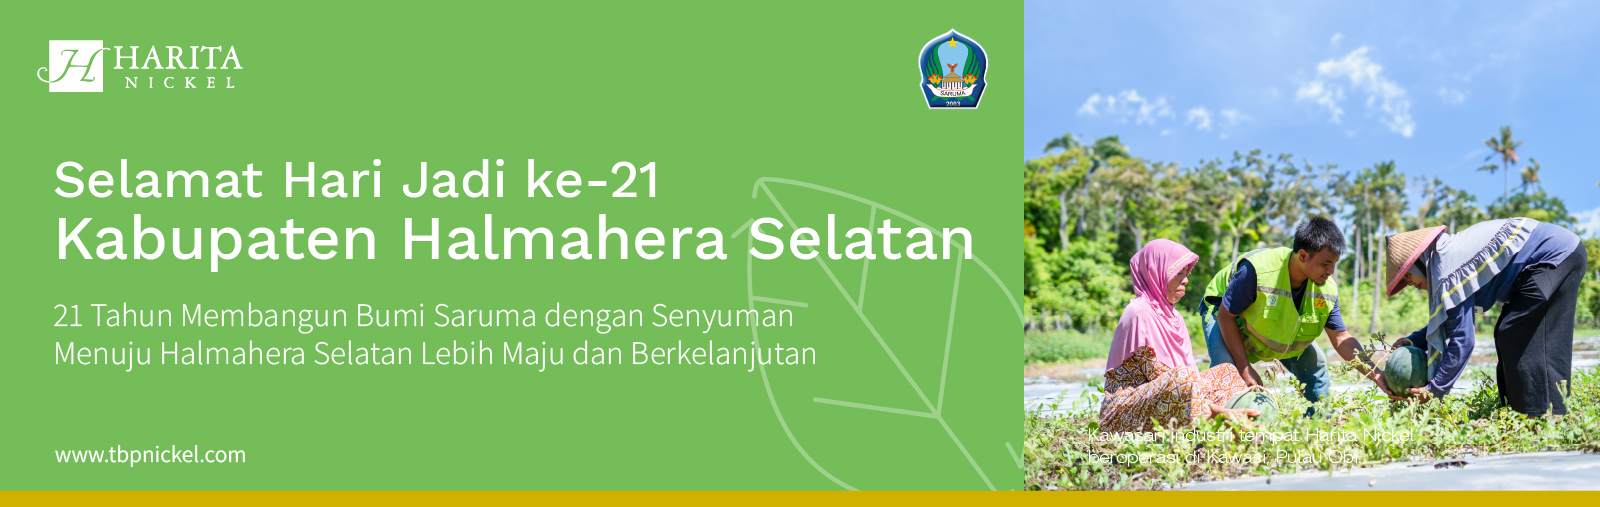 Harita Nickel Mengucapkan Selamat Hari Jadi Ke-21 Kabupaten Halmahera Selatan